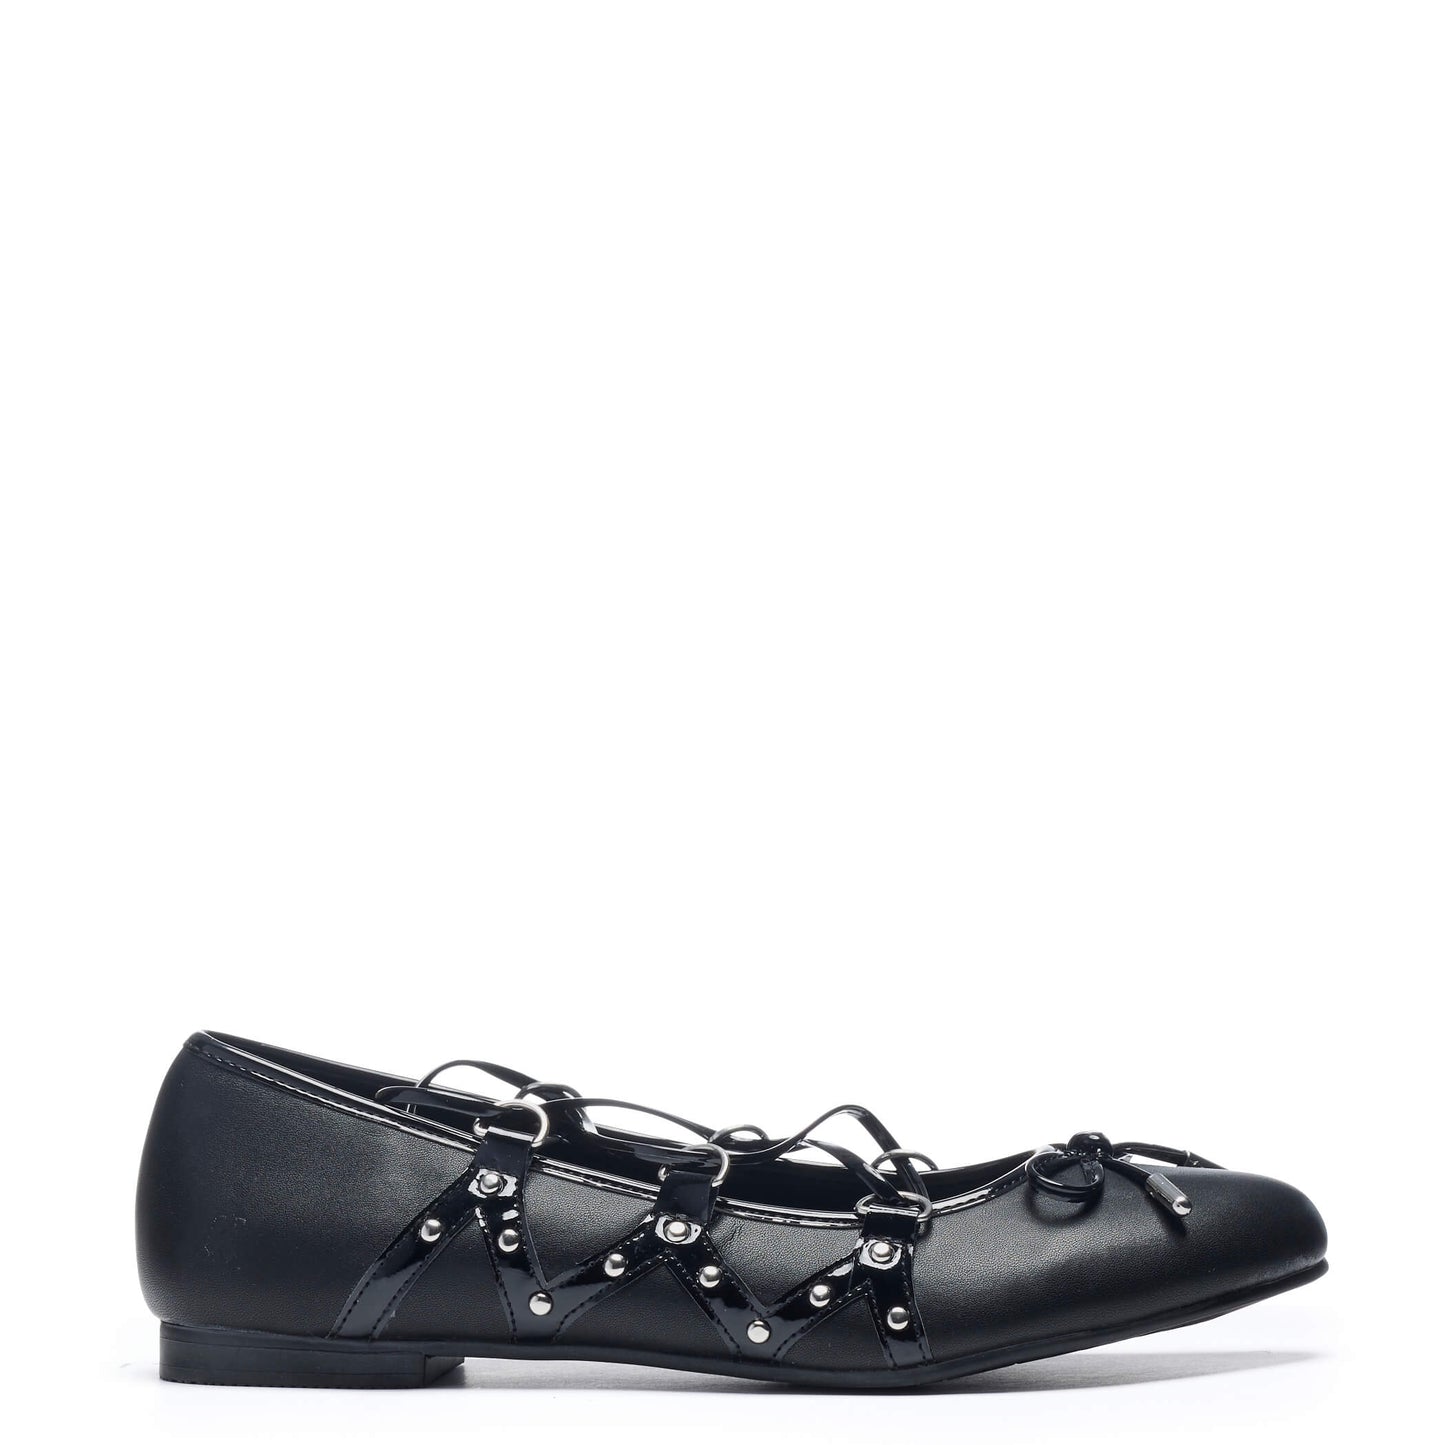 Violetta Grunge Lace Up Ballet Flat Shoes - Black - Koi Footwear - Side View